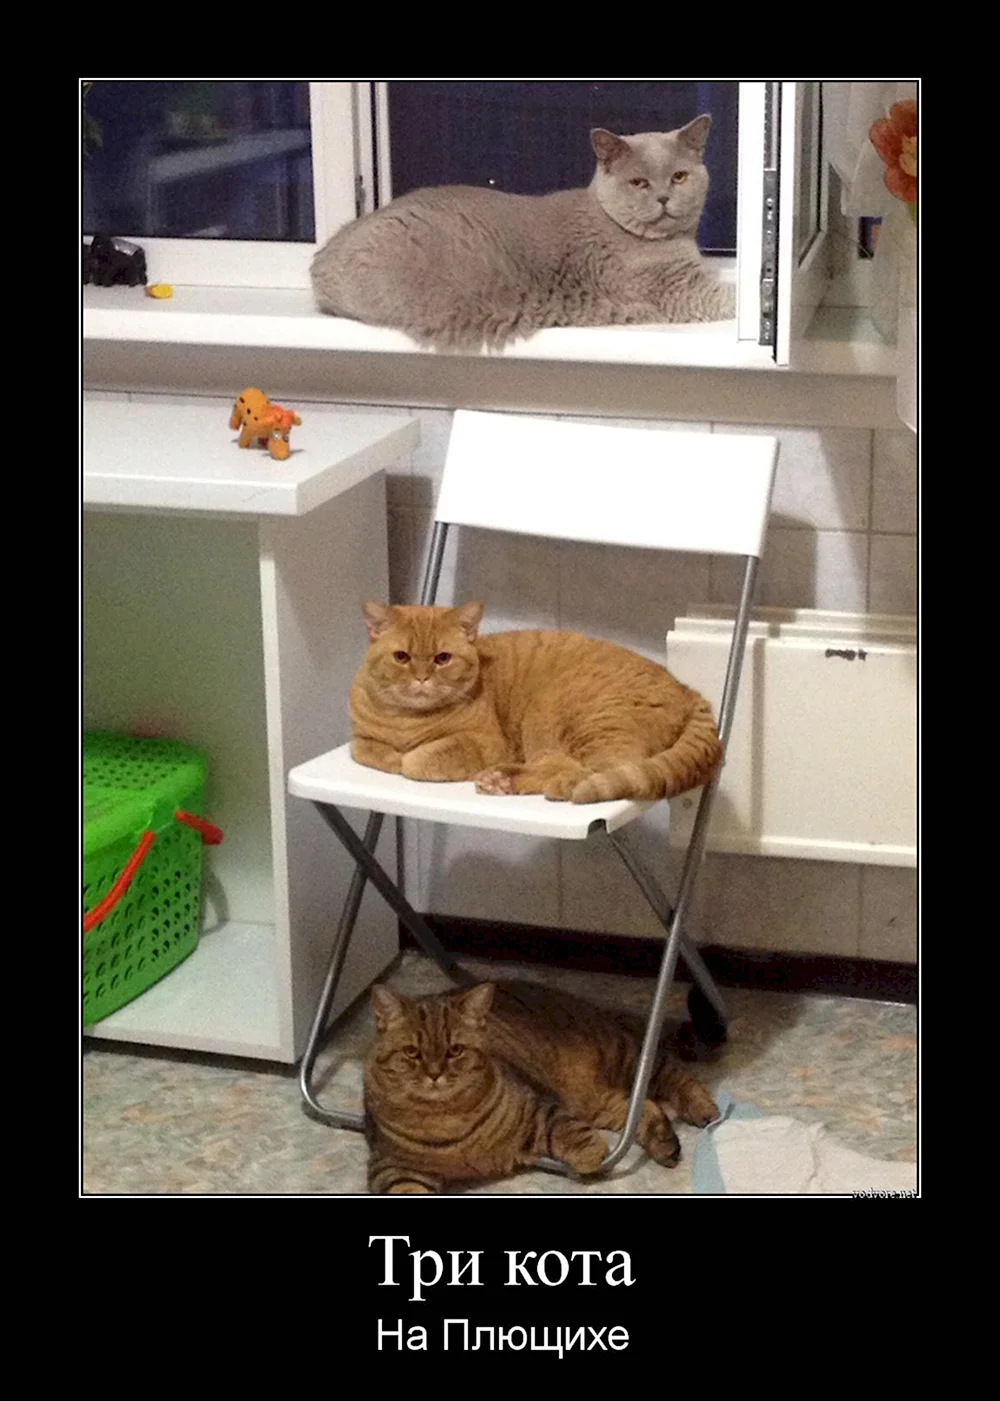 Три кота демотиватор